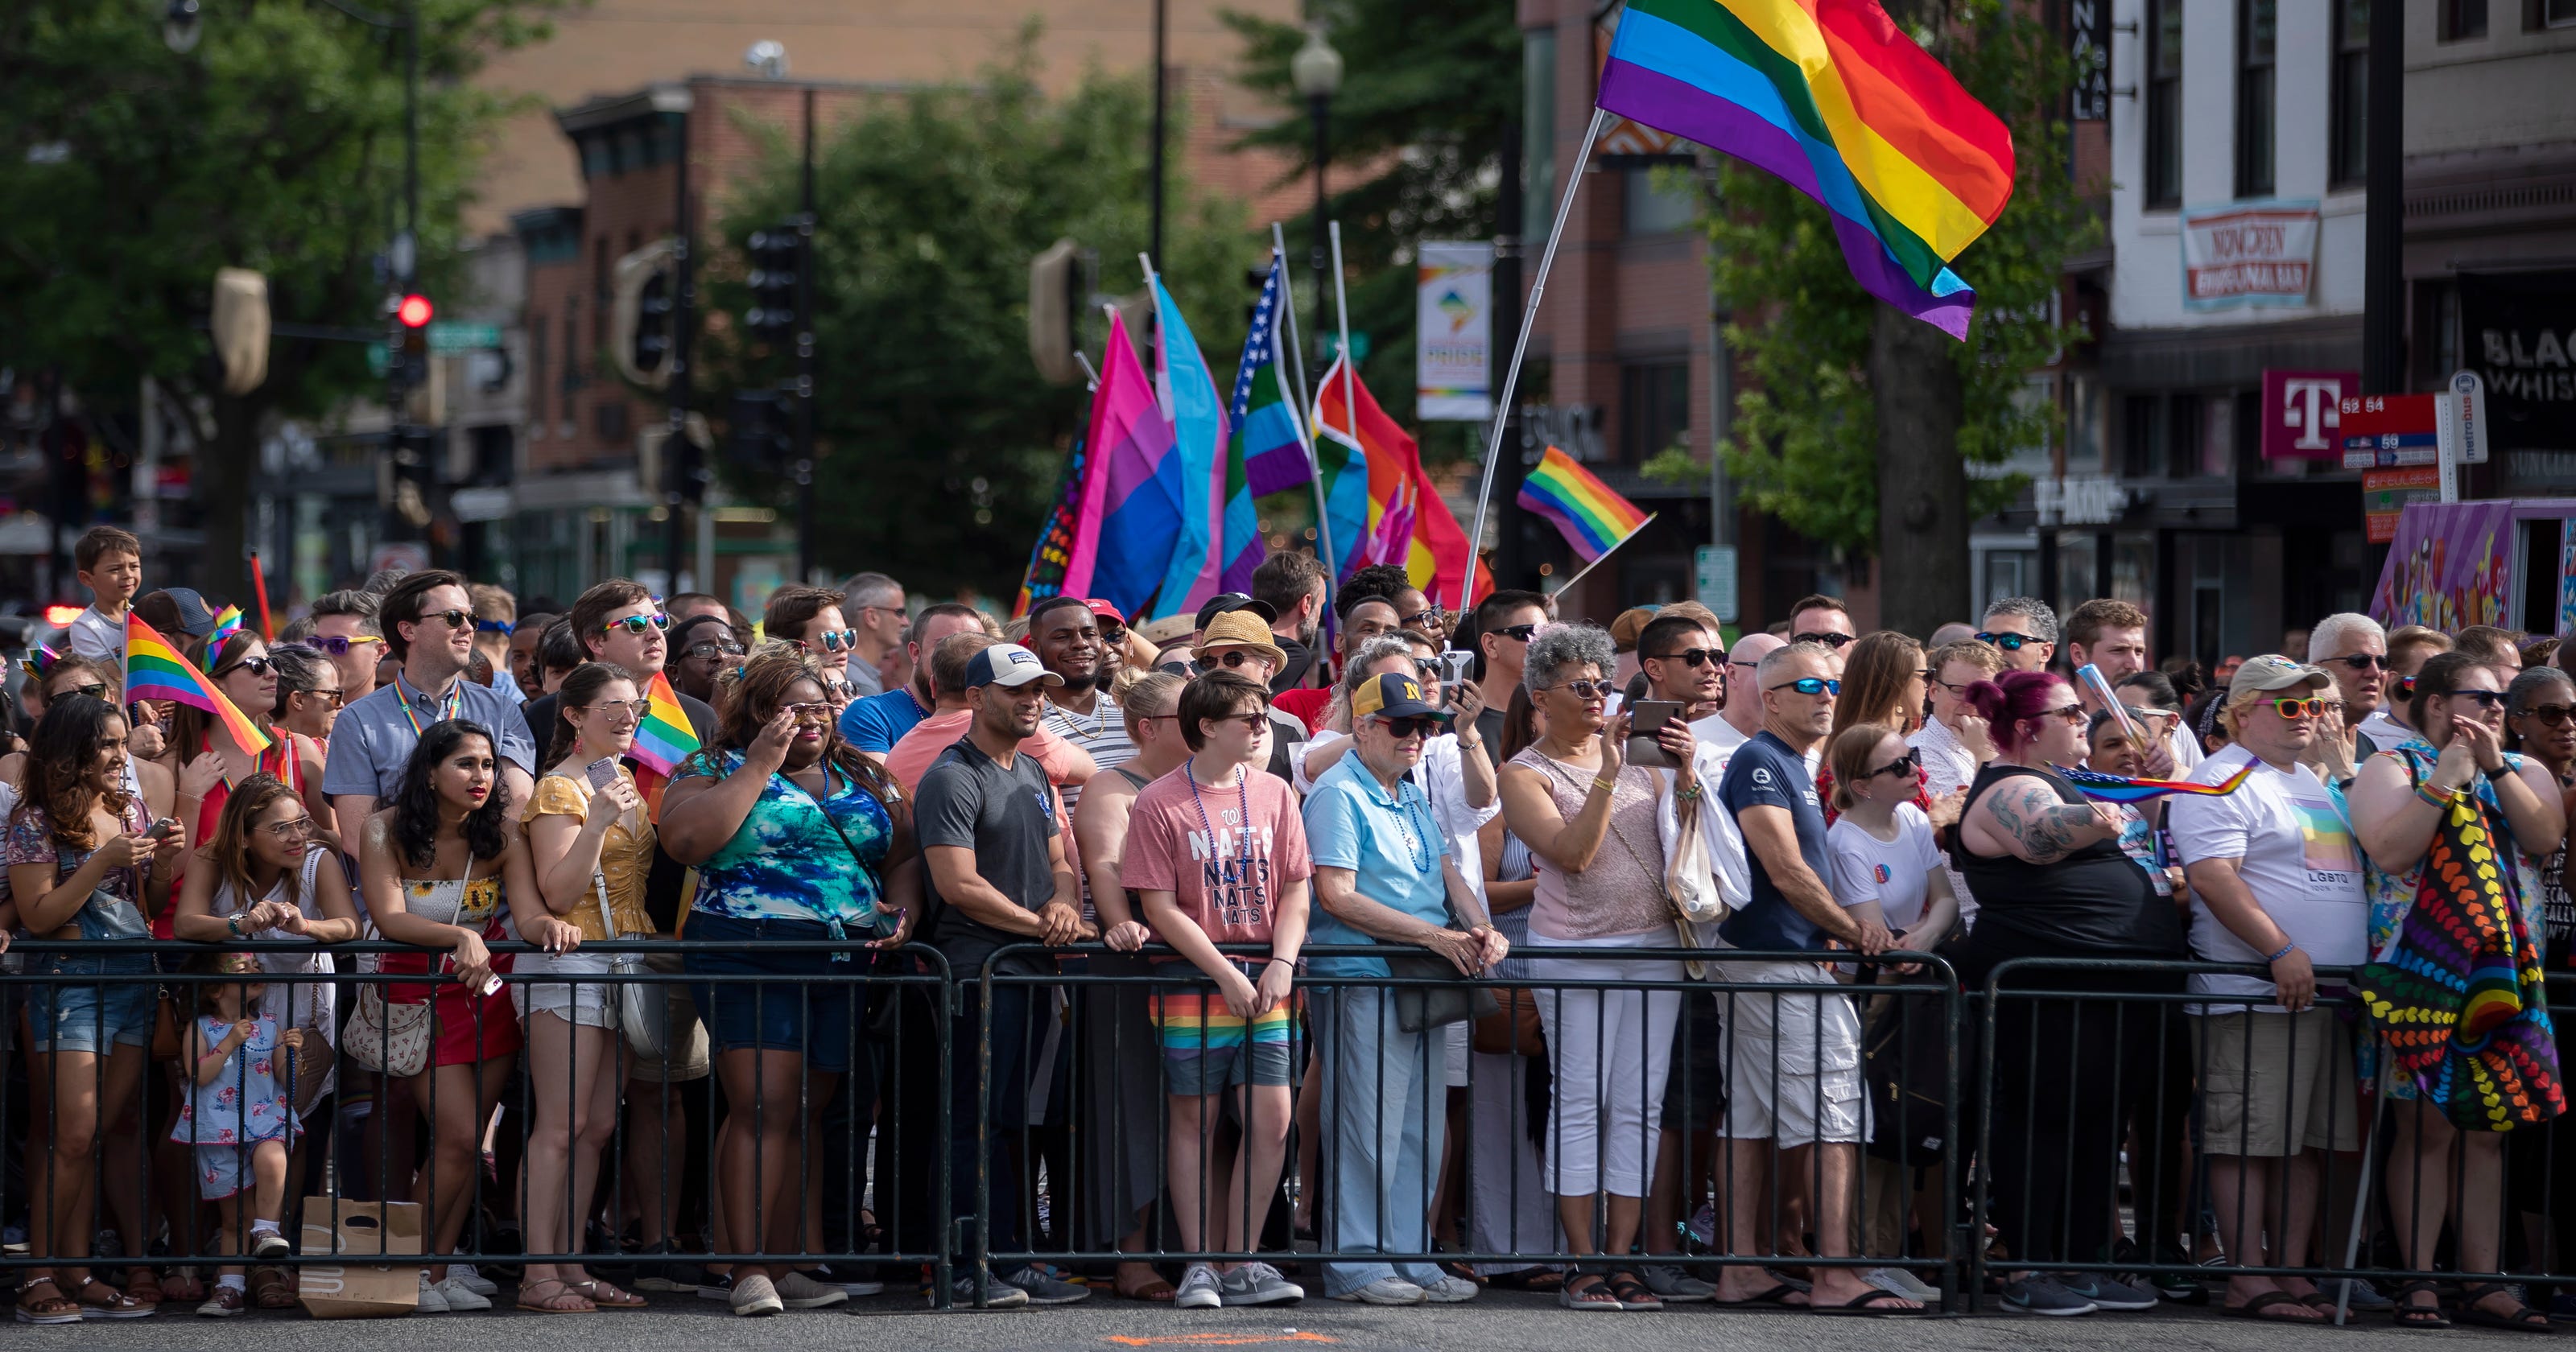 Panic at DC pride parade sends people running, several injured